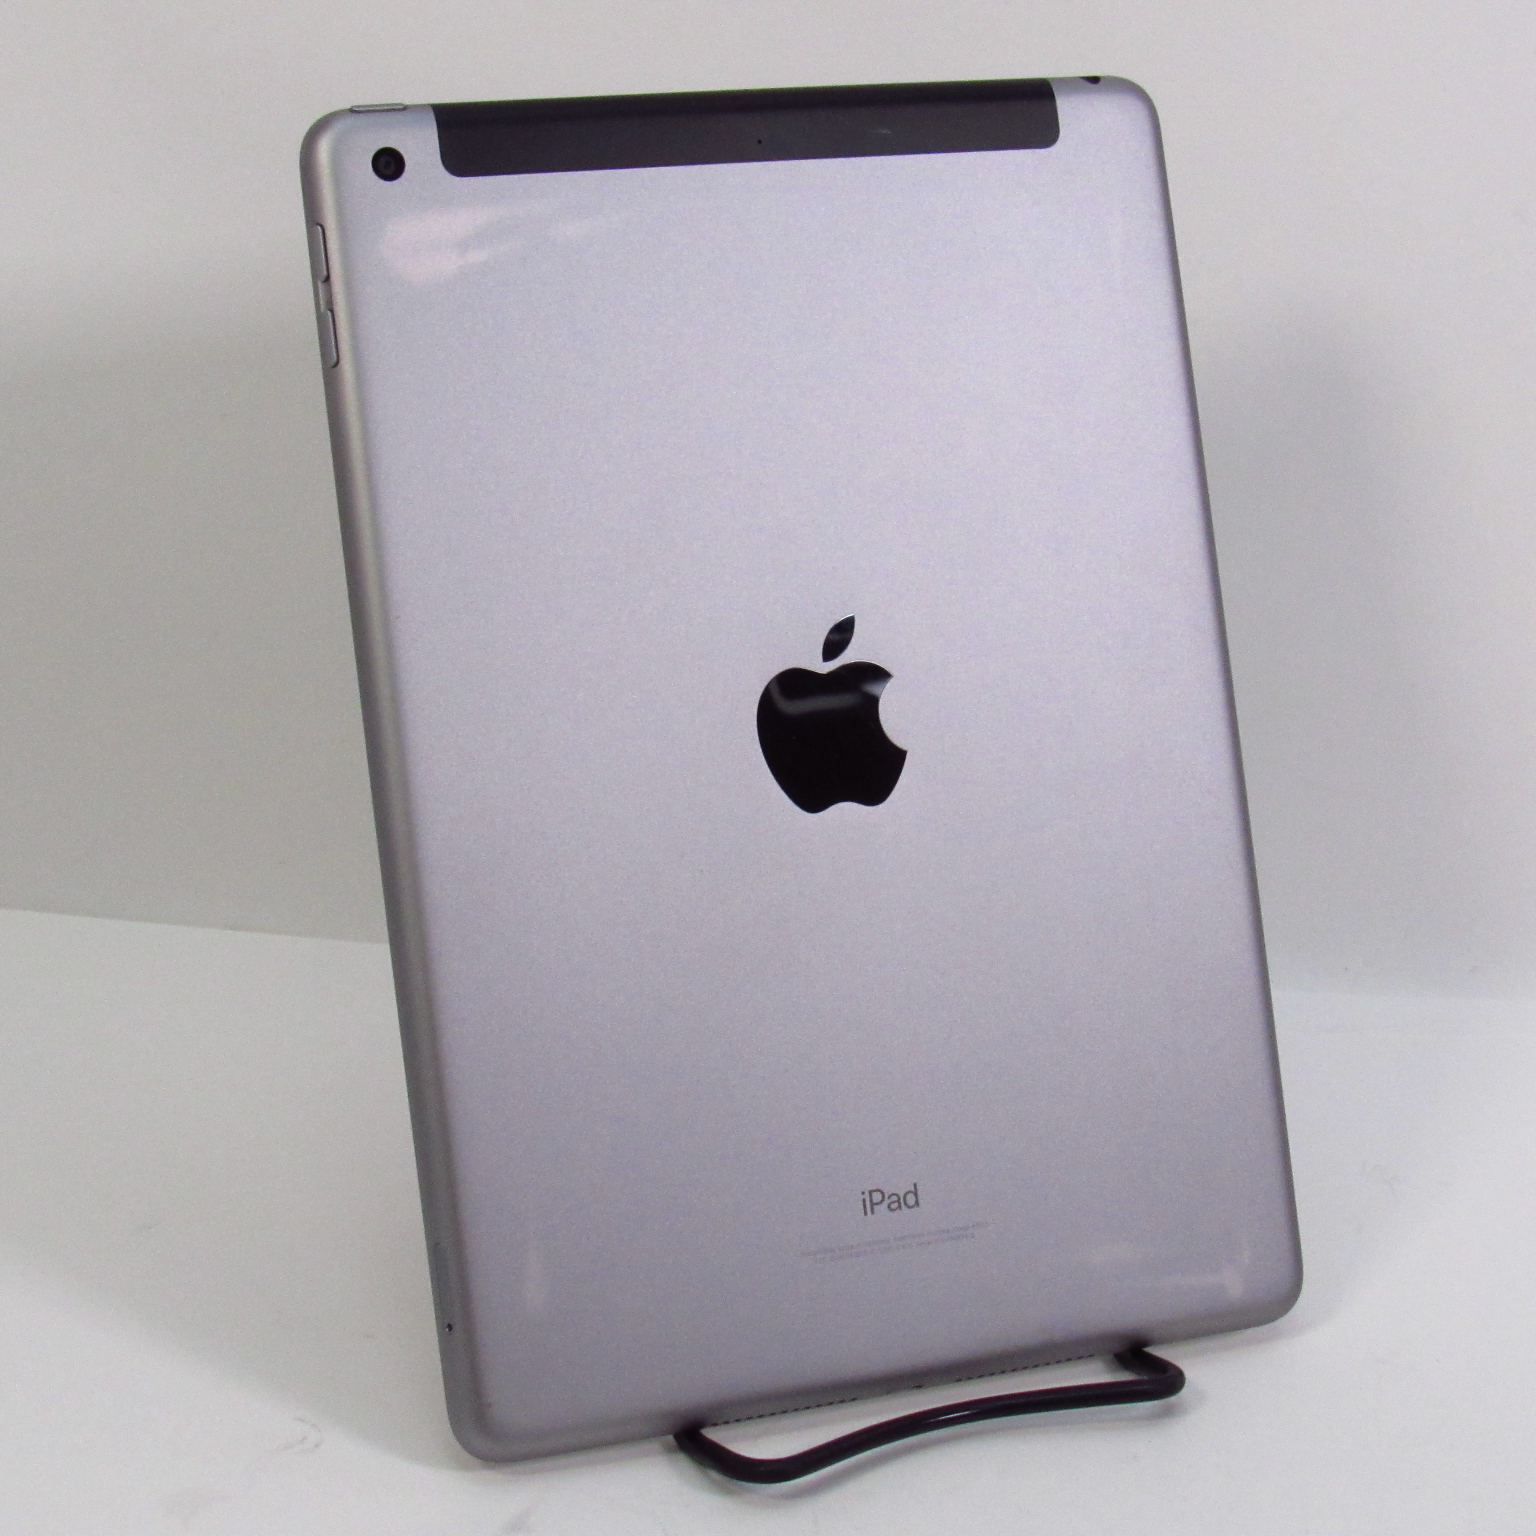 Apple iPad 5th Gen. 128GB, Wi-Fi + Cellular (Unlocked), 9.7in - Space Gray  for sale online